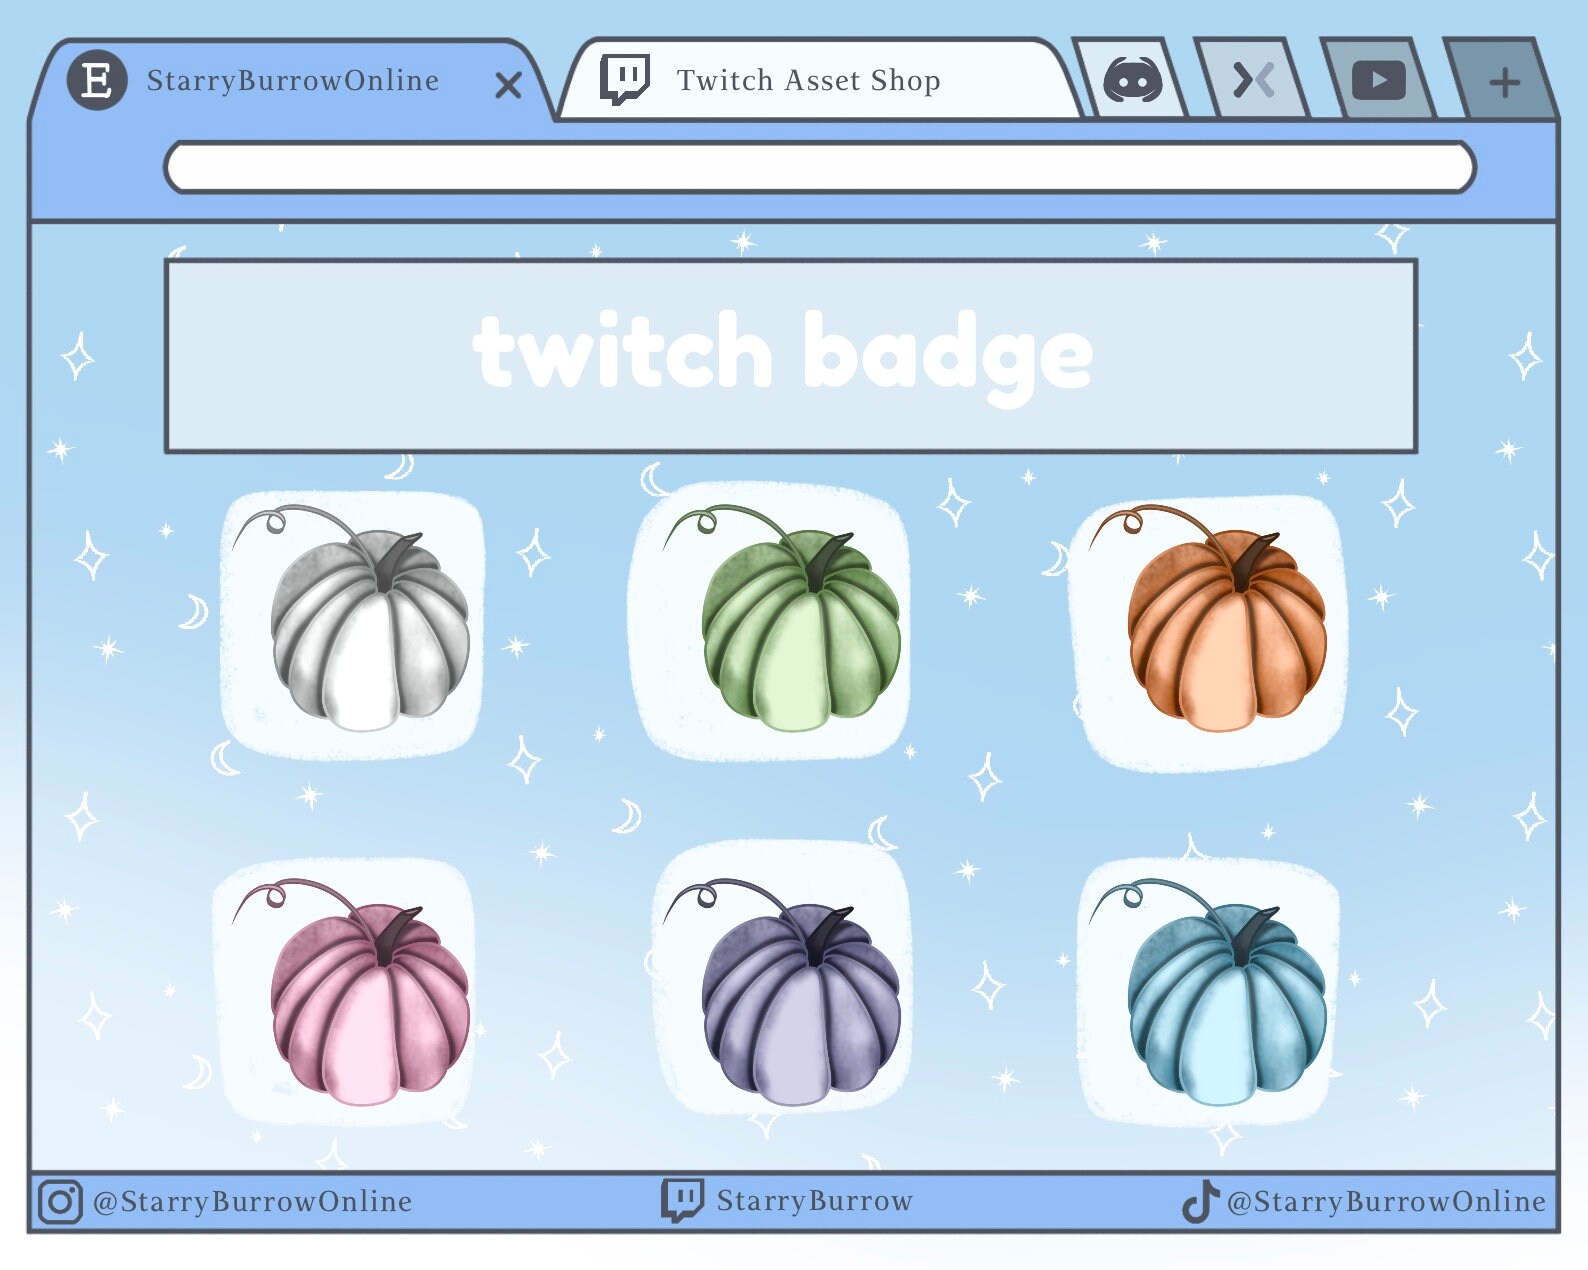 ArtStation - Twitch Sub Badges: Pumpkins